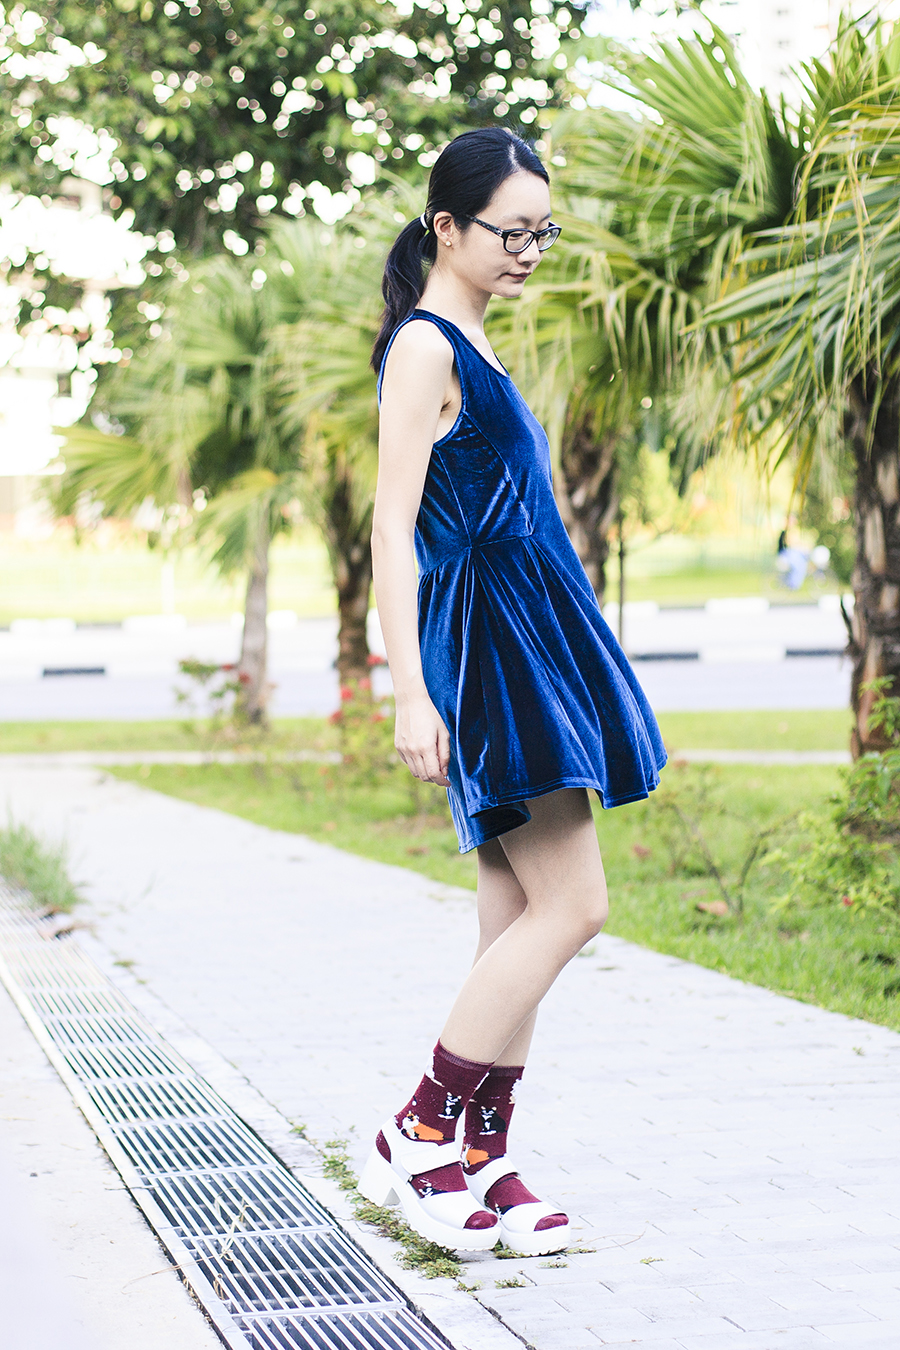 Blue velvet dress from Cotton On, black frame prescription glasses from Gap, cat socks from Taobao, white platform sandals from Taobao.